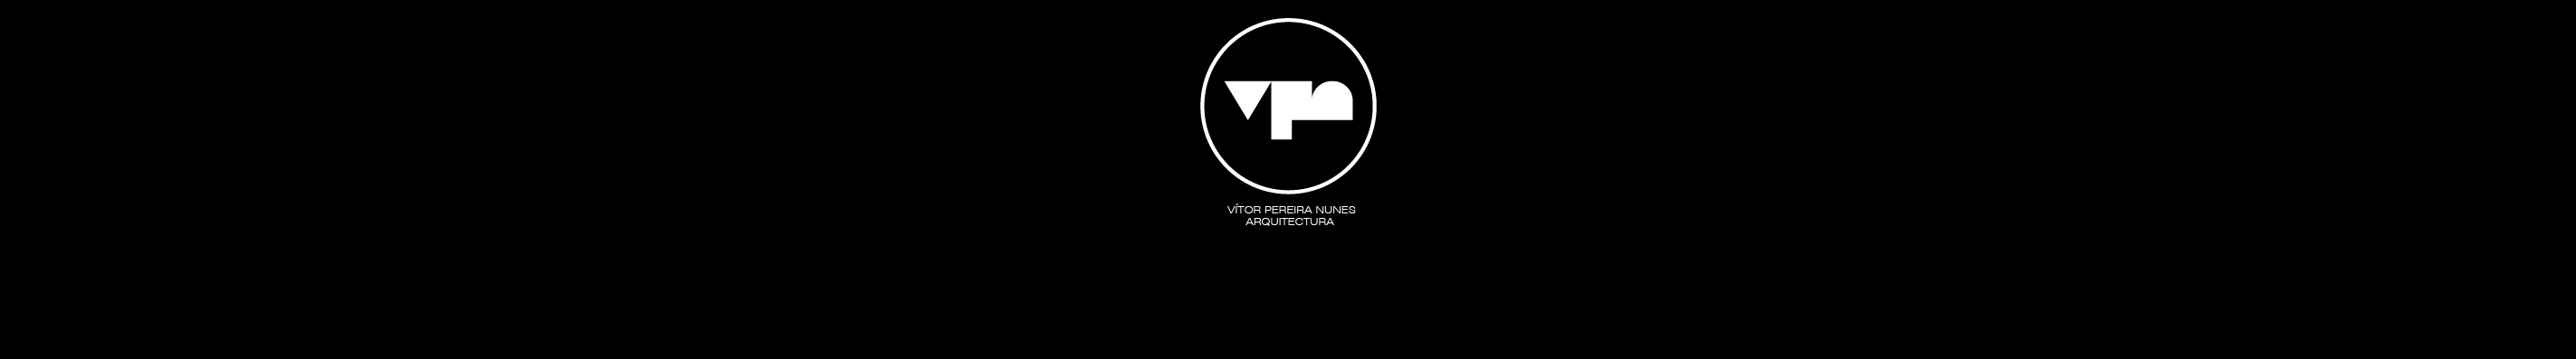 Vítor Pereira Nunes Archviz's profile banner